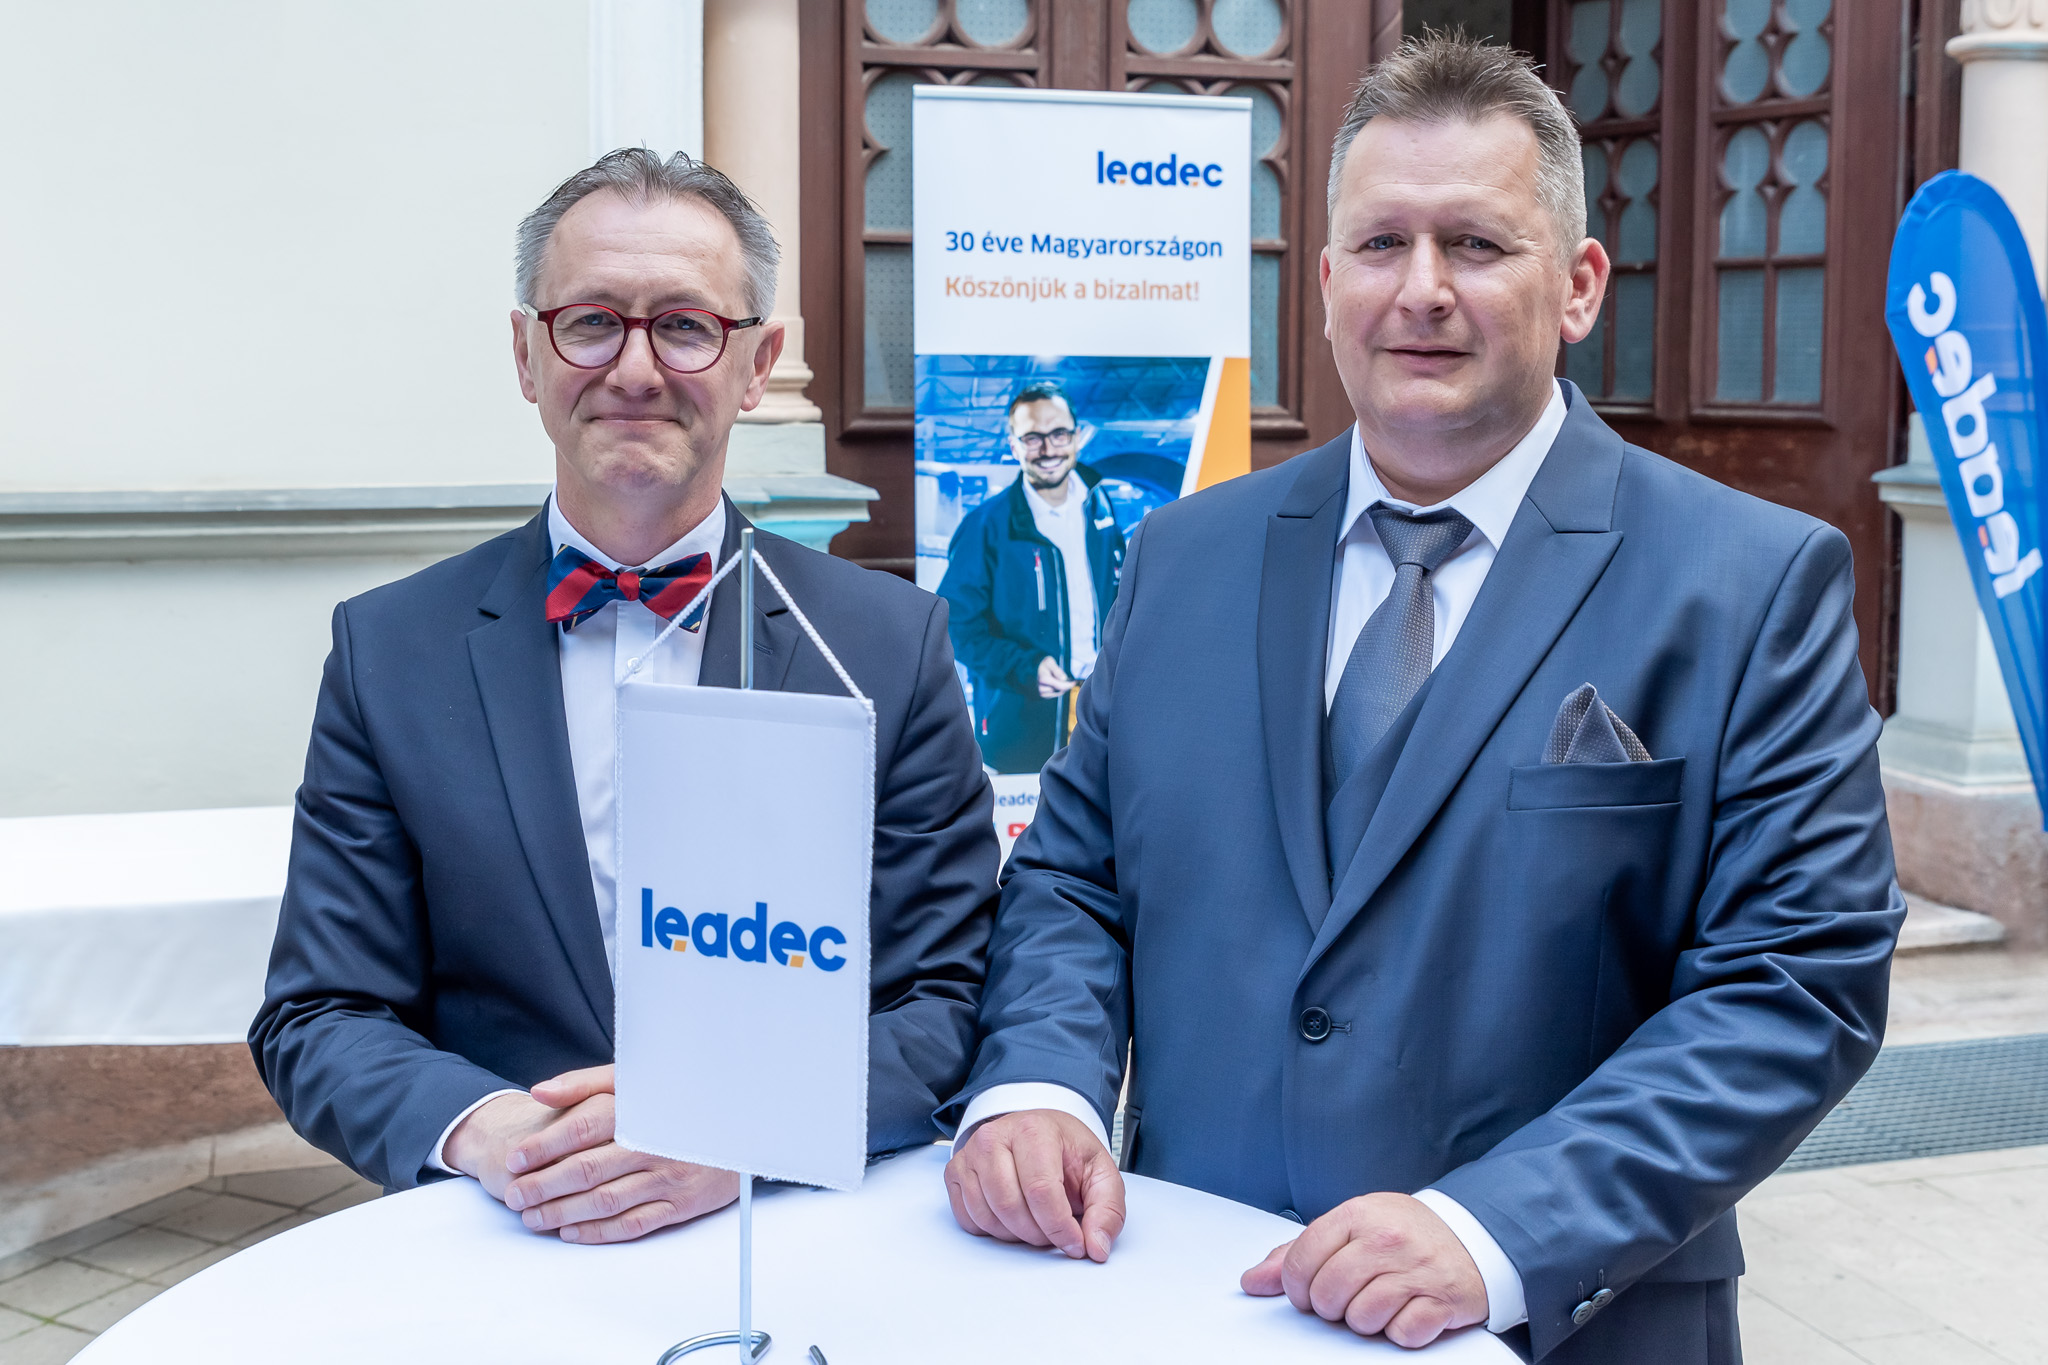 Leadec Ltd. celebrates 30th anniversary at SZE